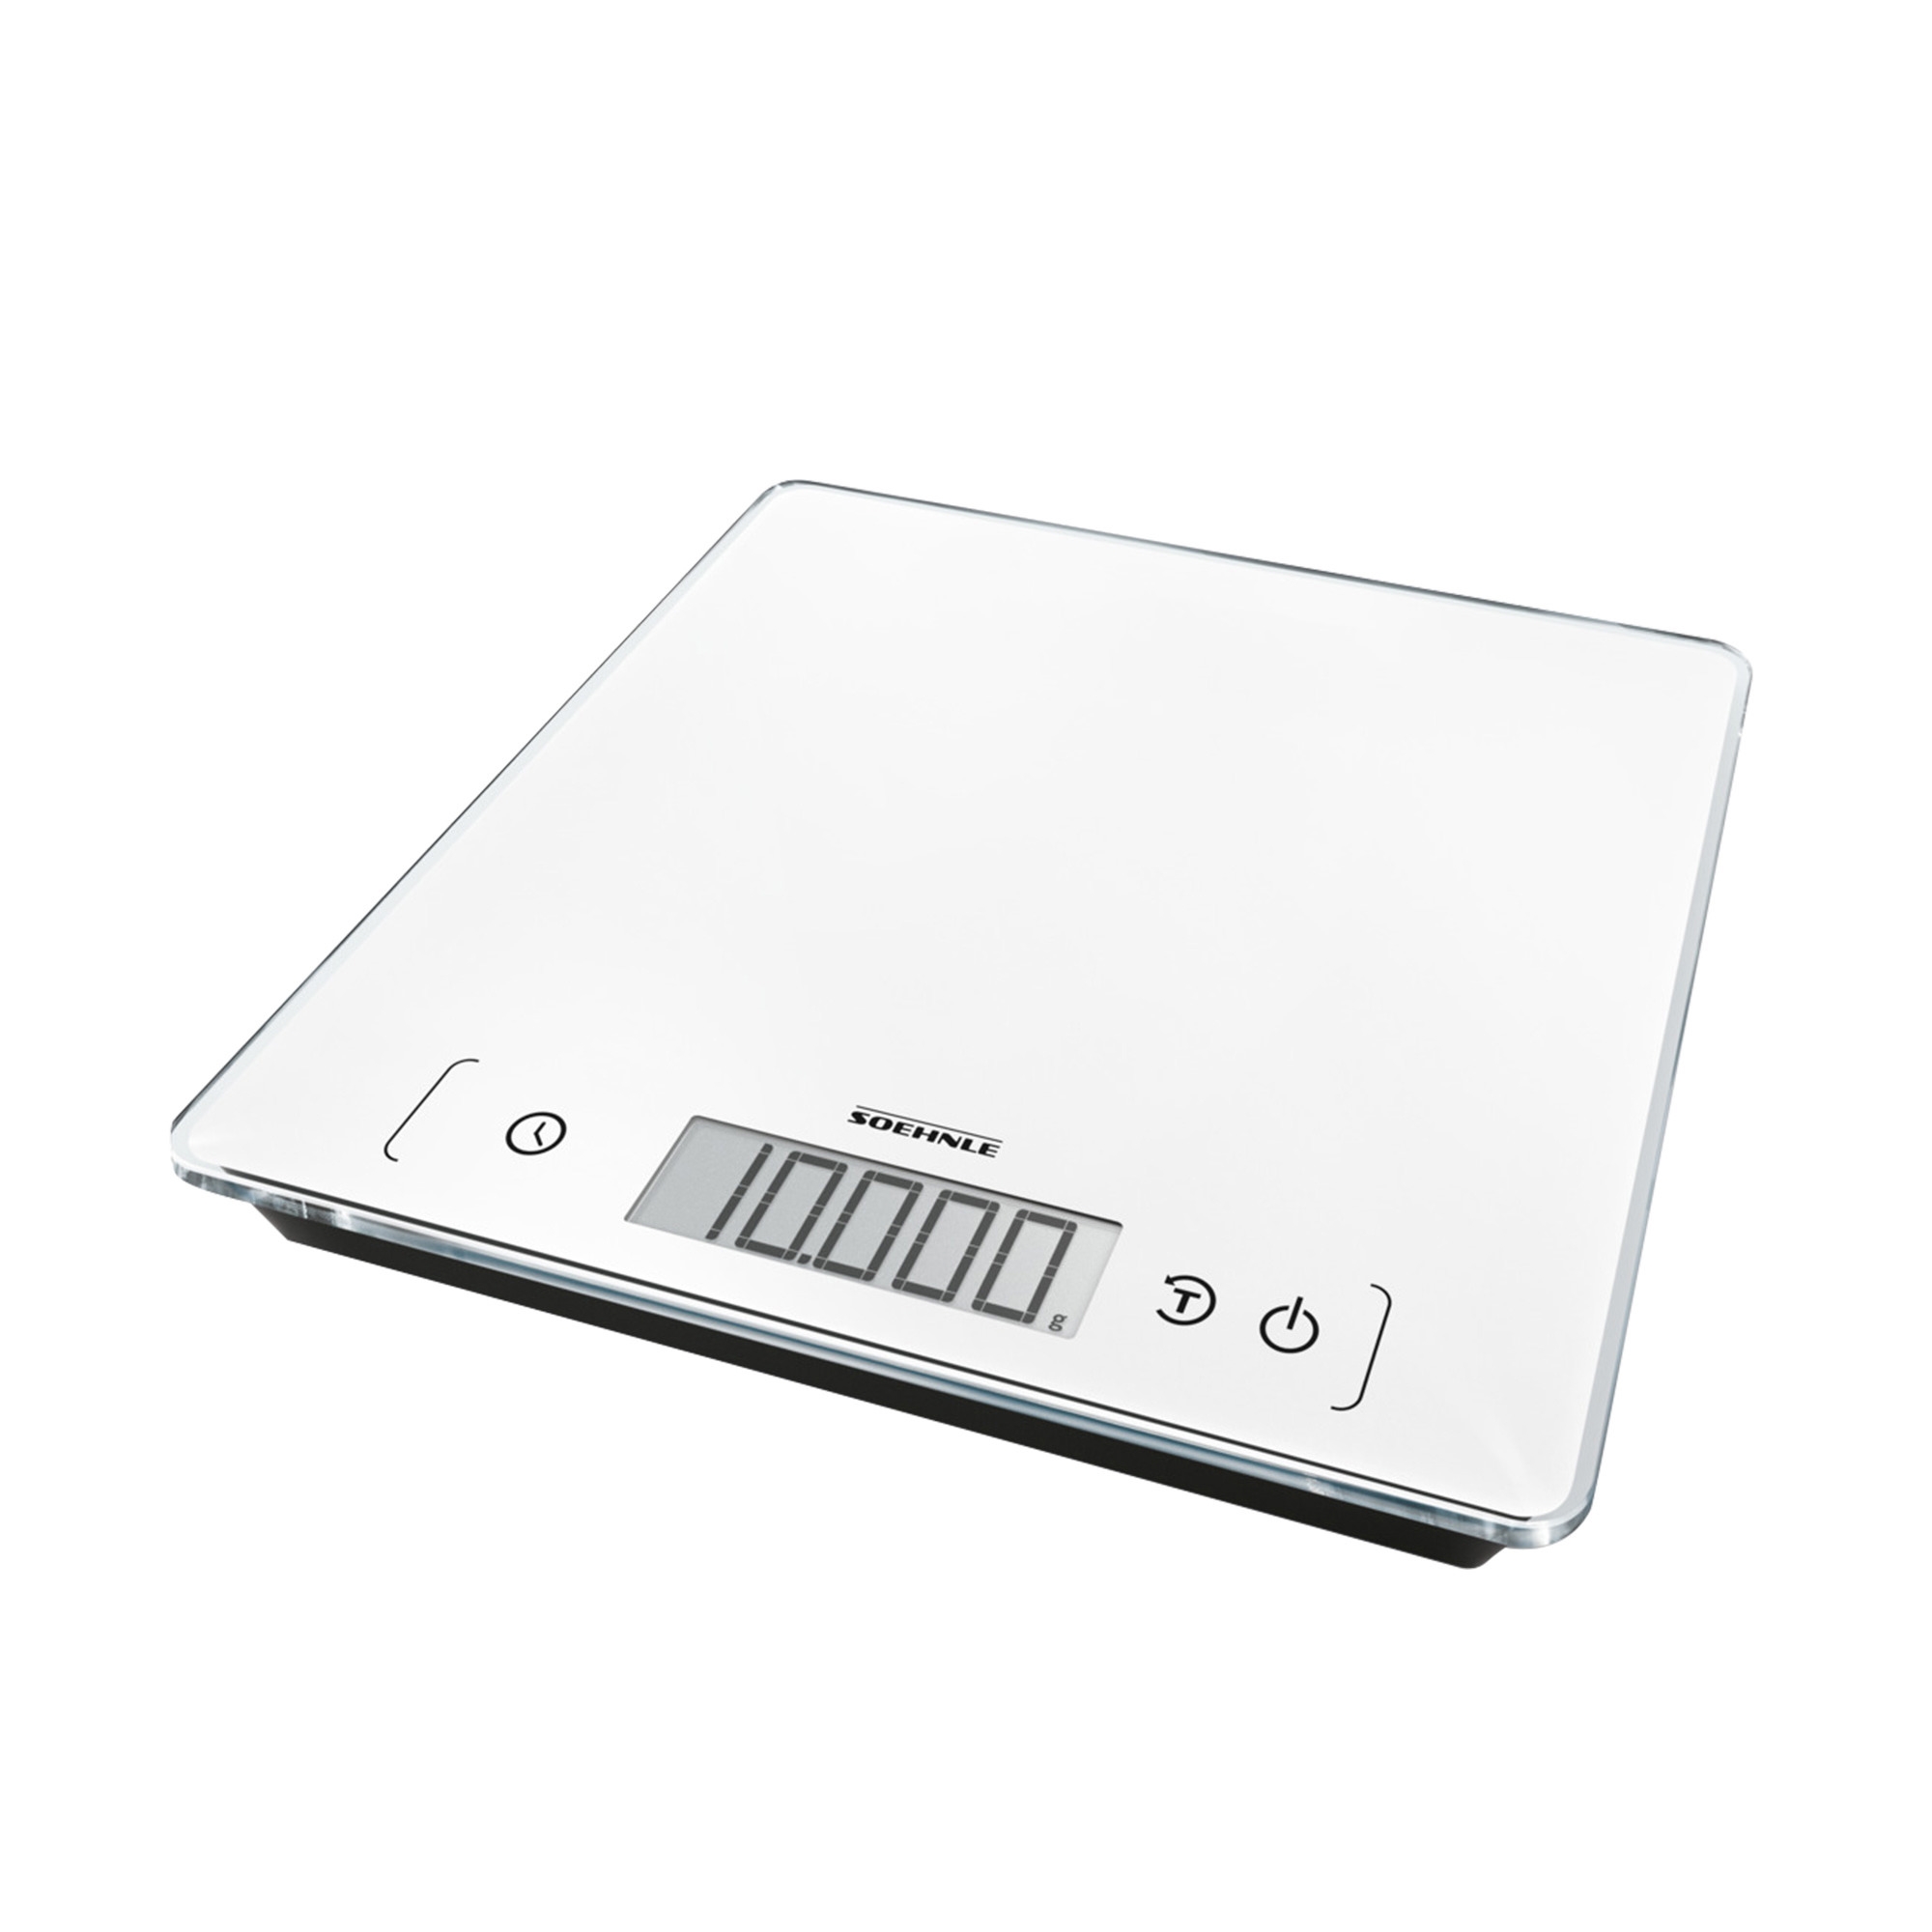 Soehnle Page Comfort 400 Digital Kitchen Scale 10kg White Image 2